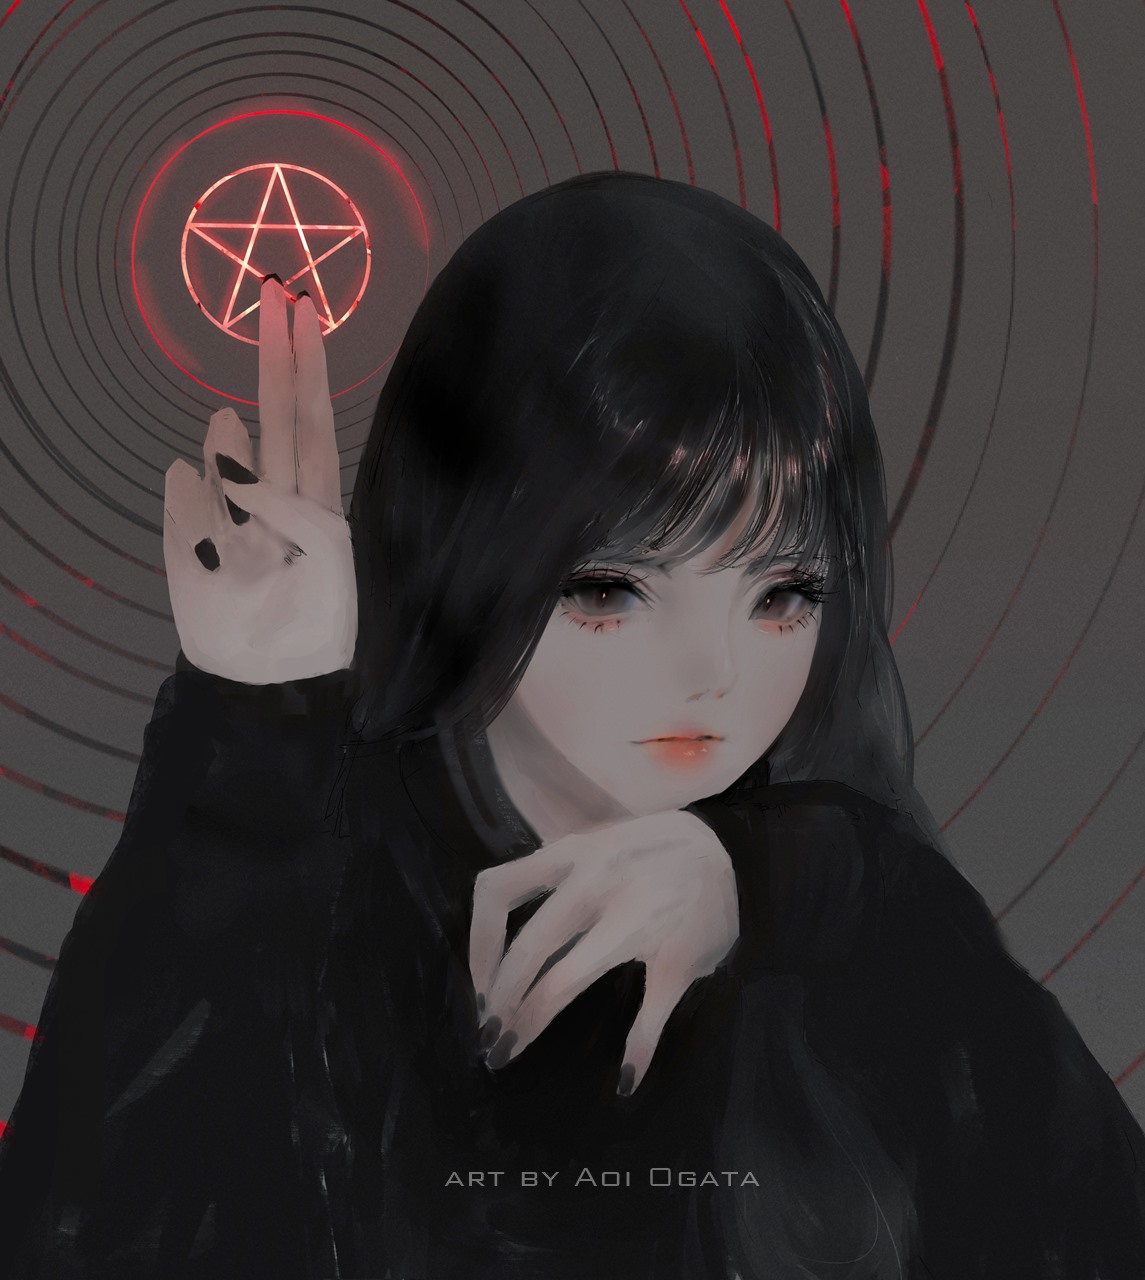 Anime 1145x1280 Aoi Ogata 2D magic circle anime girls satanic pentagram portrait display